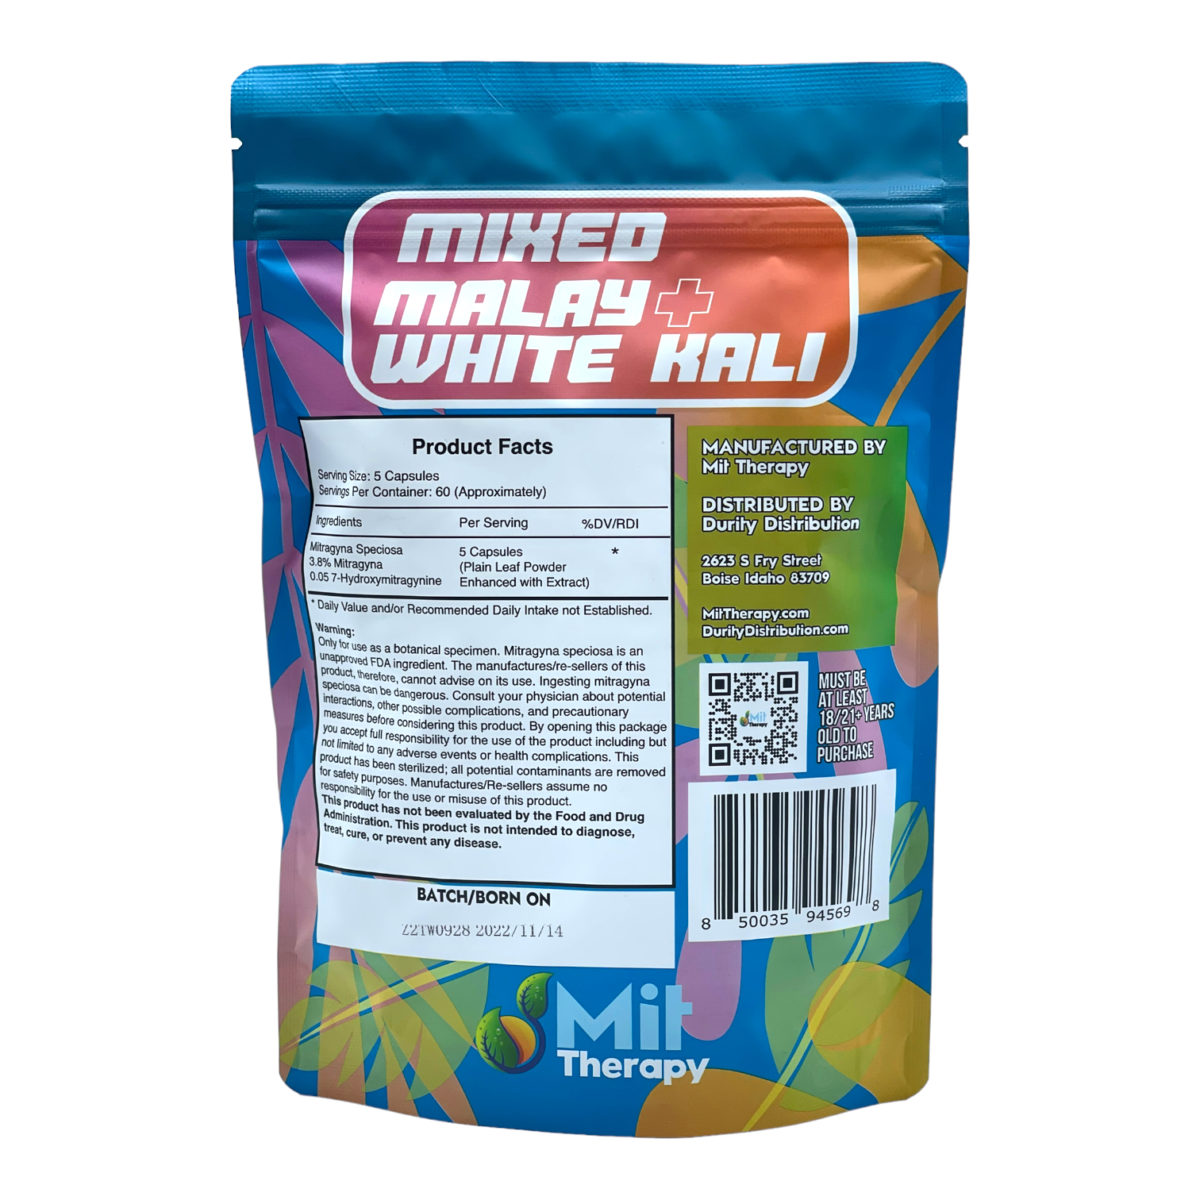 MIT Therapy Extract Enhanced Kratom Capsules, Mixed Malay White Kali